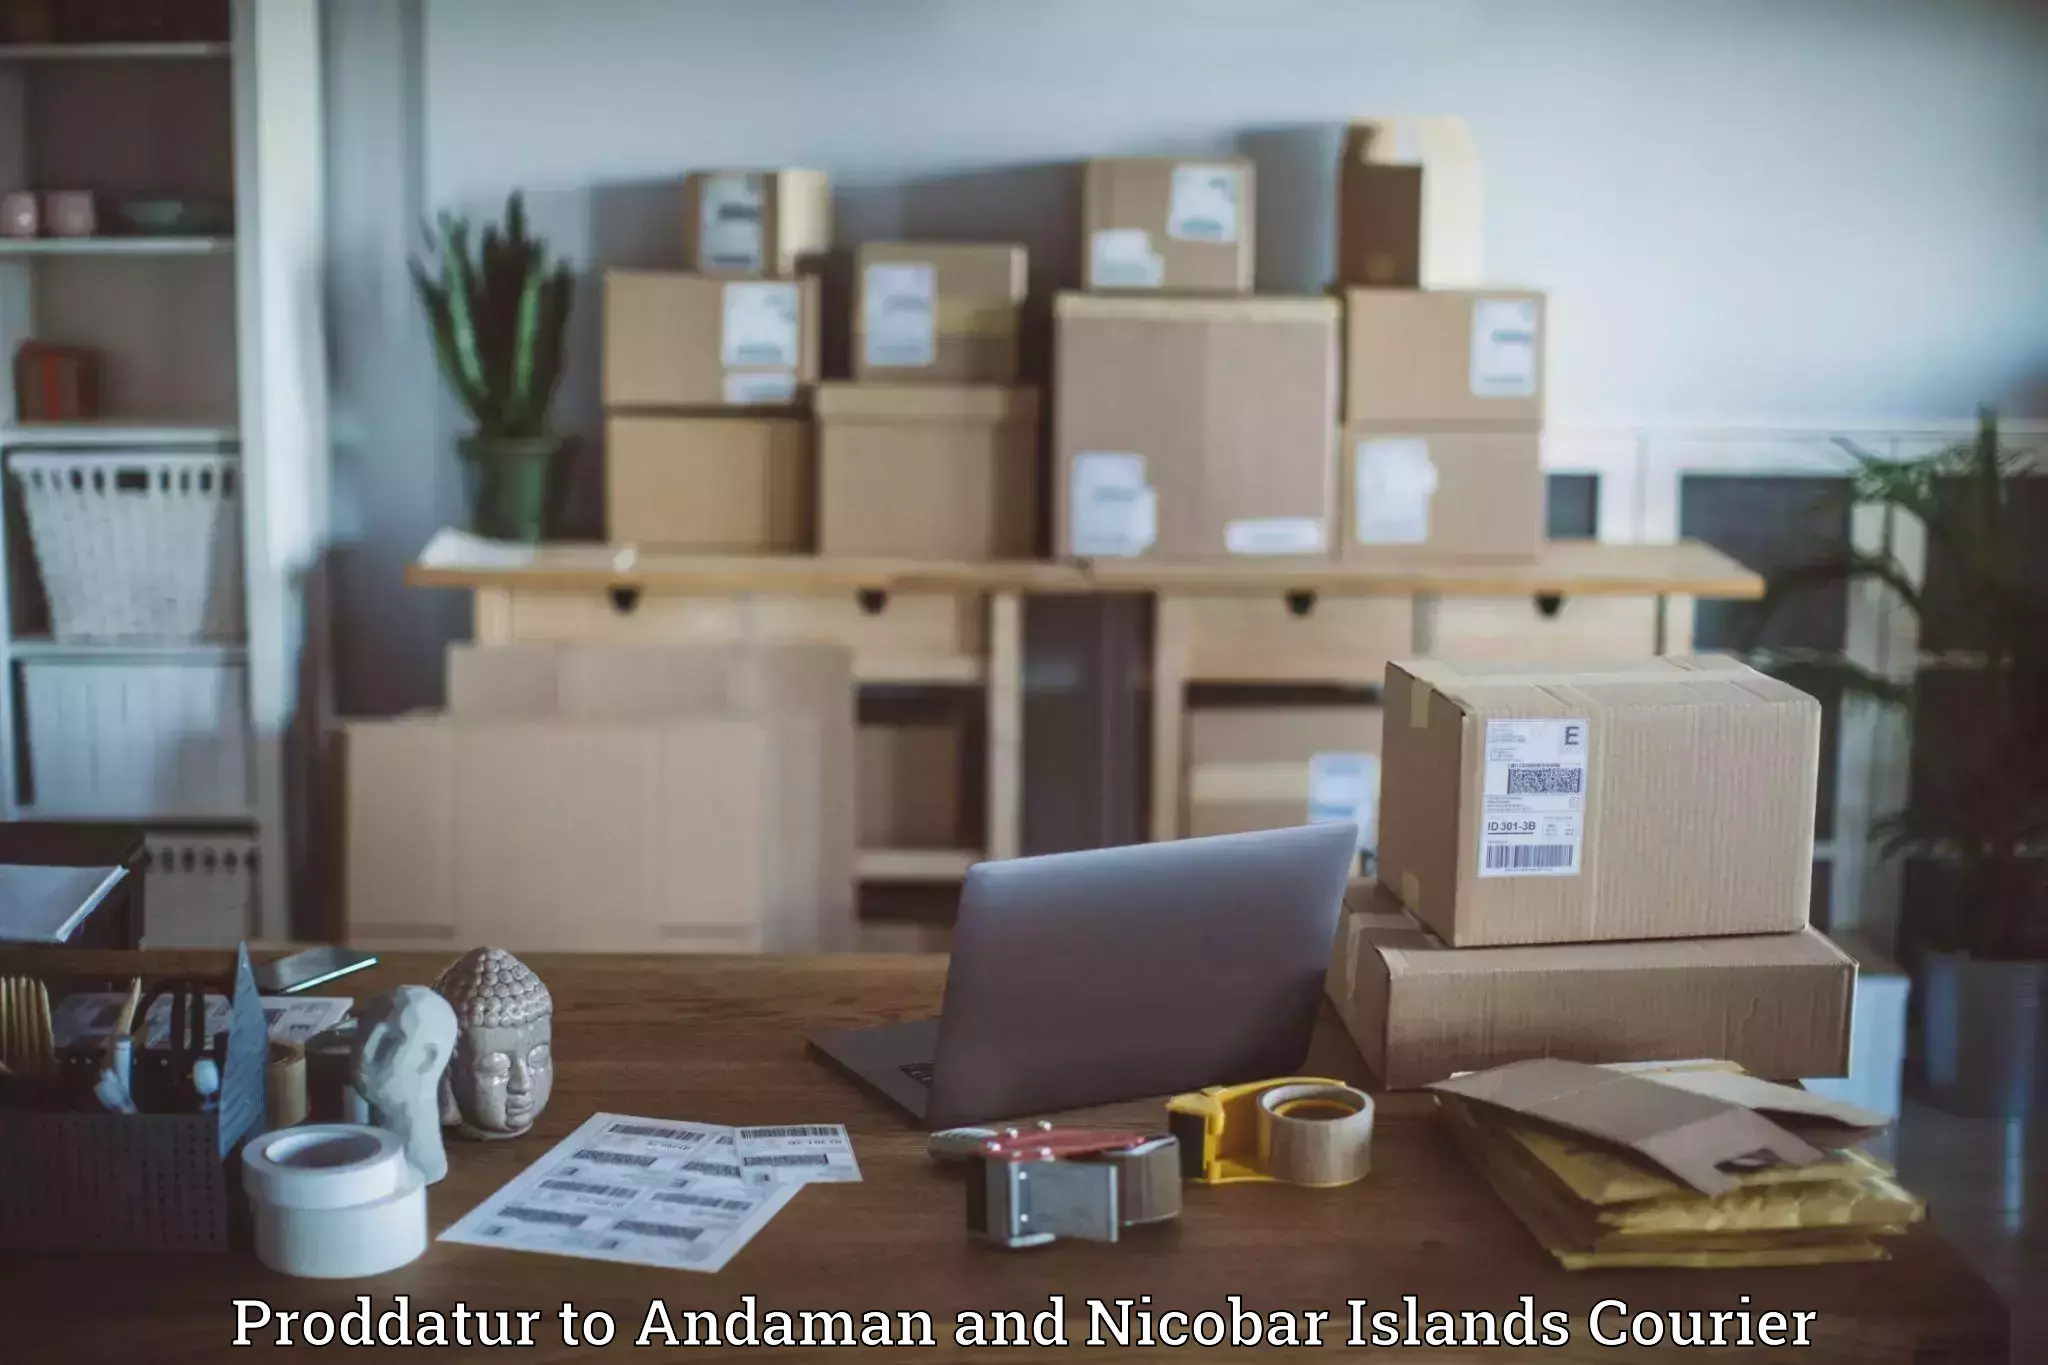 Digital shipping tools Proddatur to Andaman and Nicobar Islands